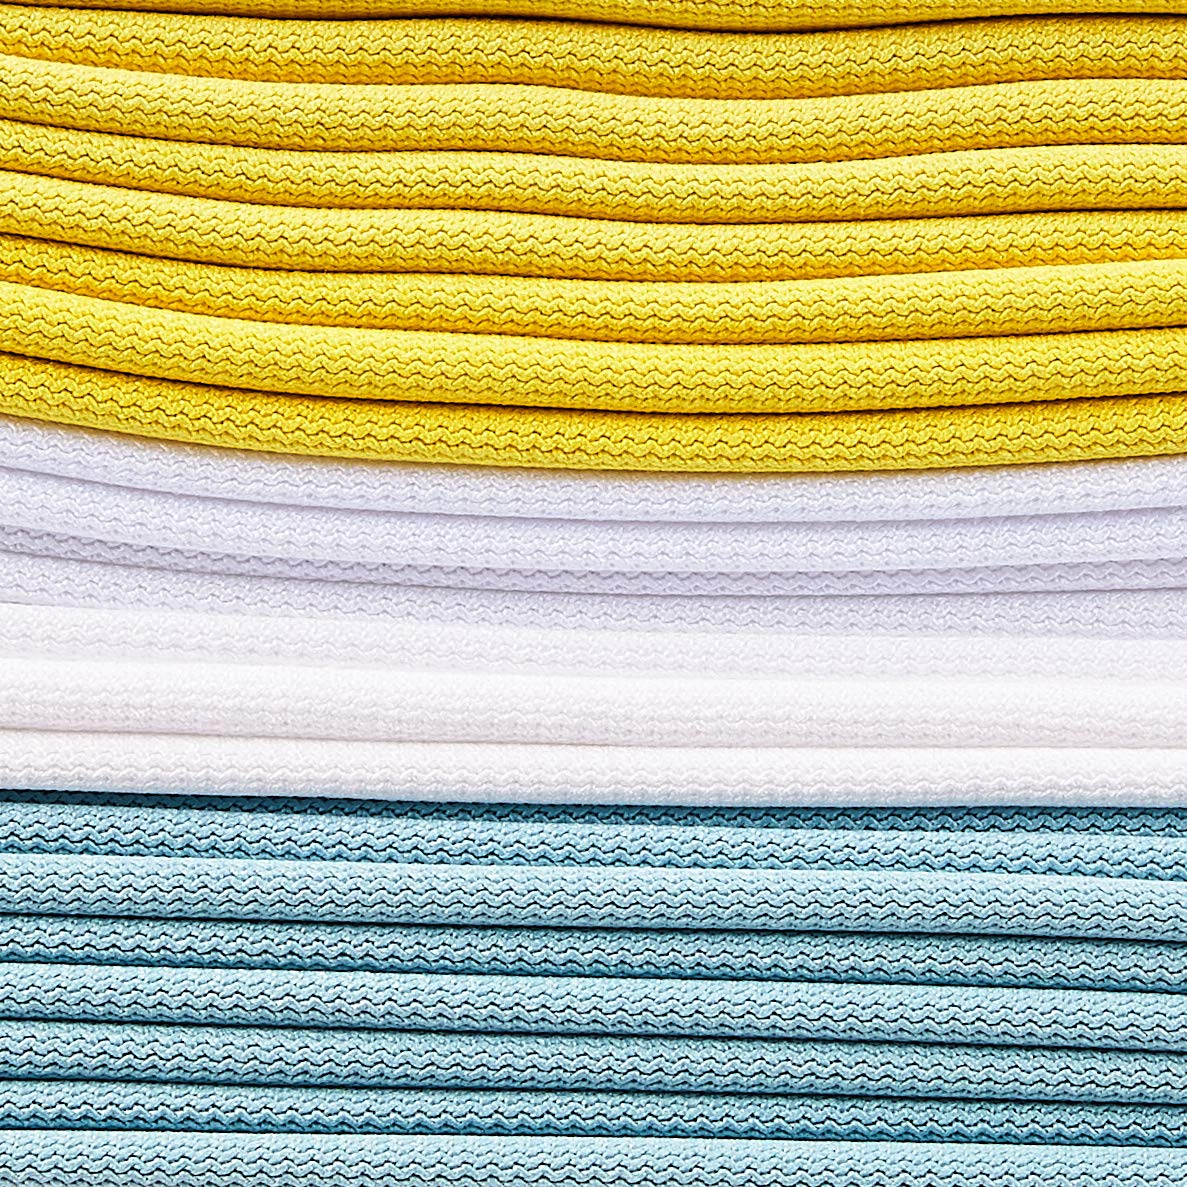 Amazon Basics Microfiber Glass Fabric Cleaning Cloth, Blue/Yellow/White, 24-Pack